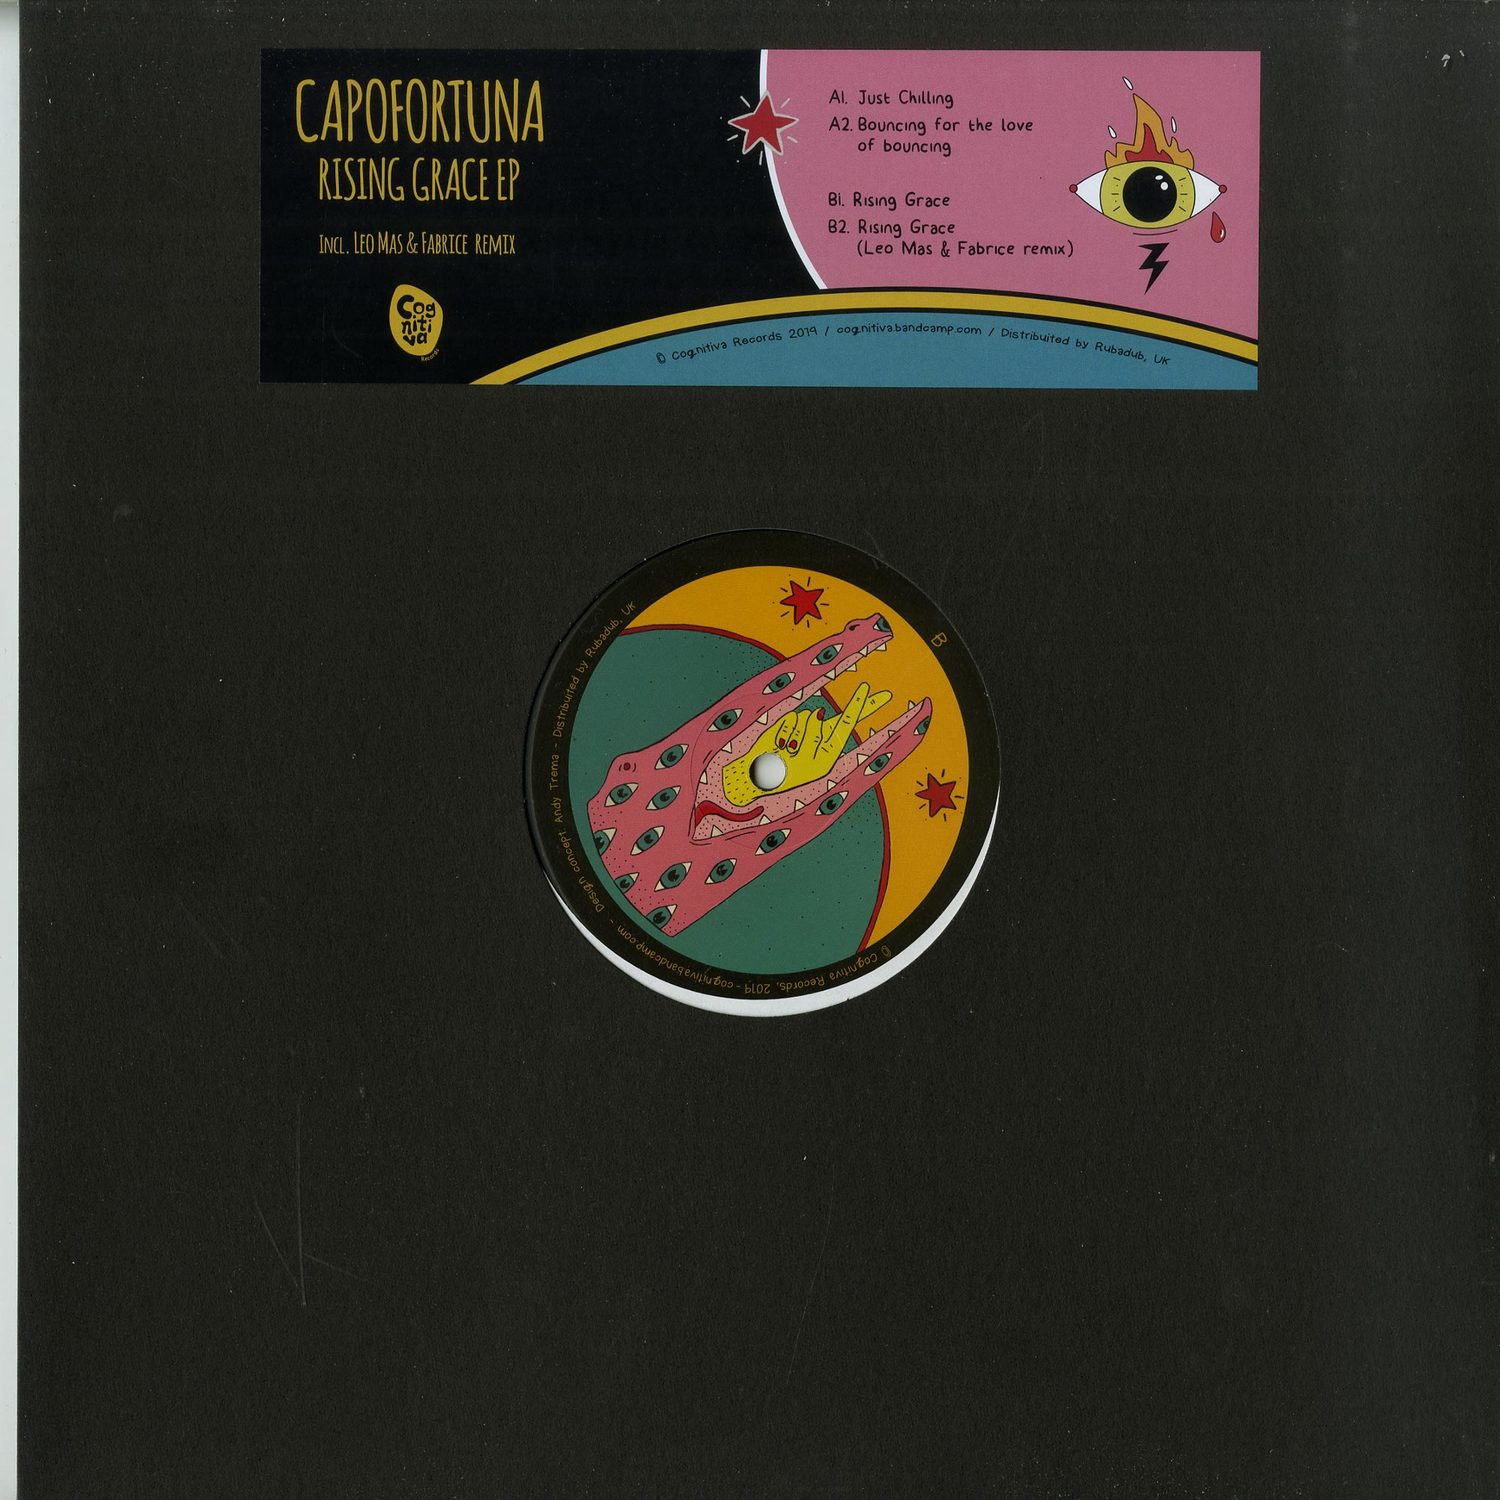 Capofortuna - RISING GRACE EP